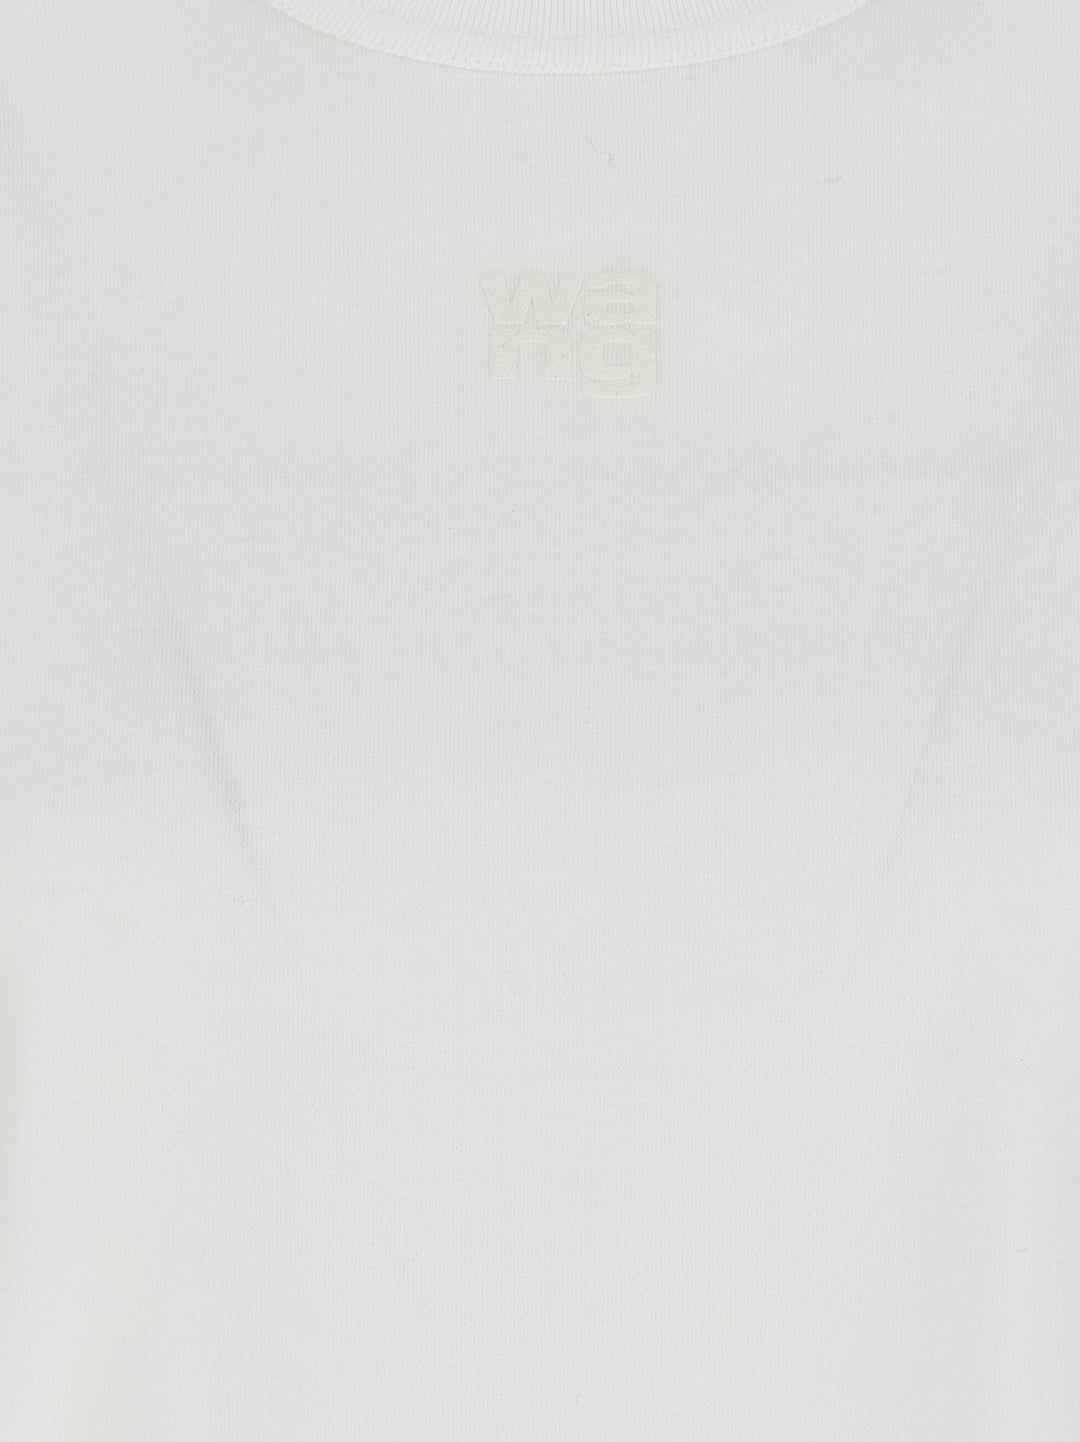 Essential Jsy Shrunk T Shirt Bianco